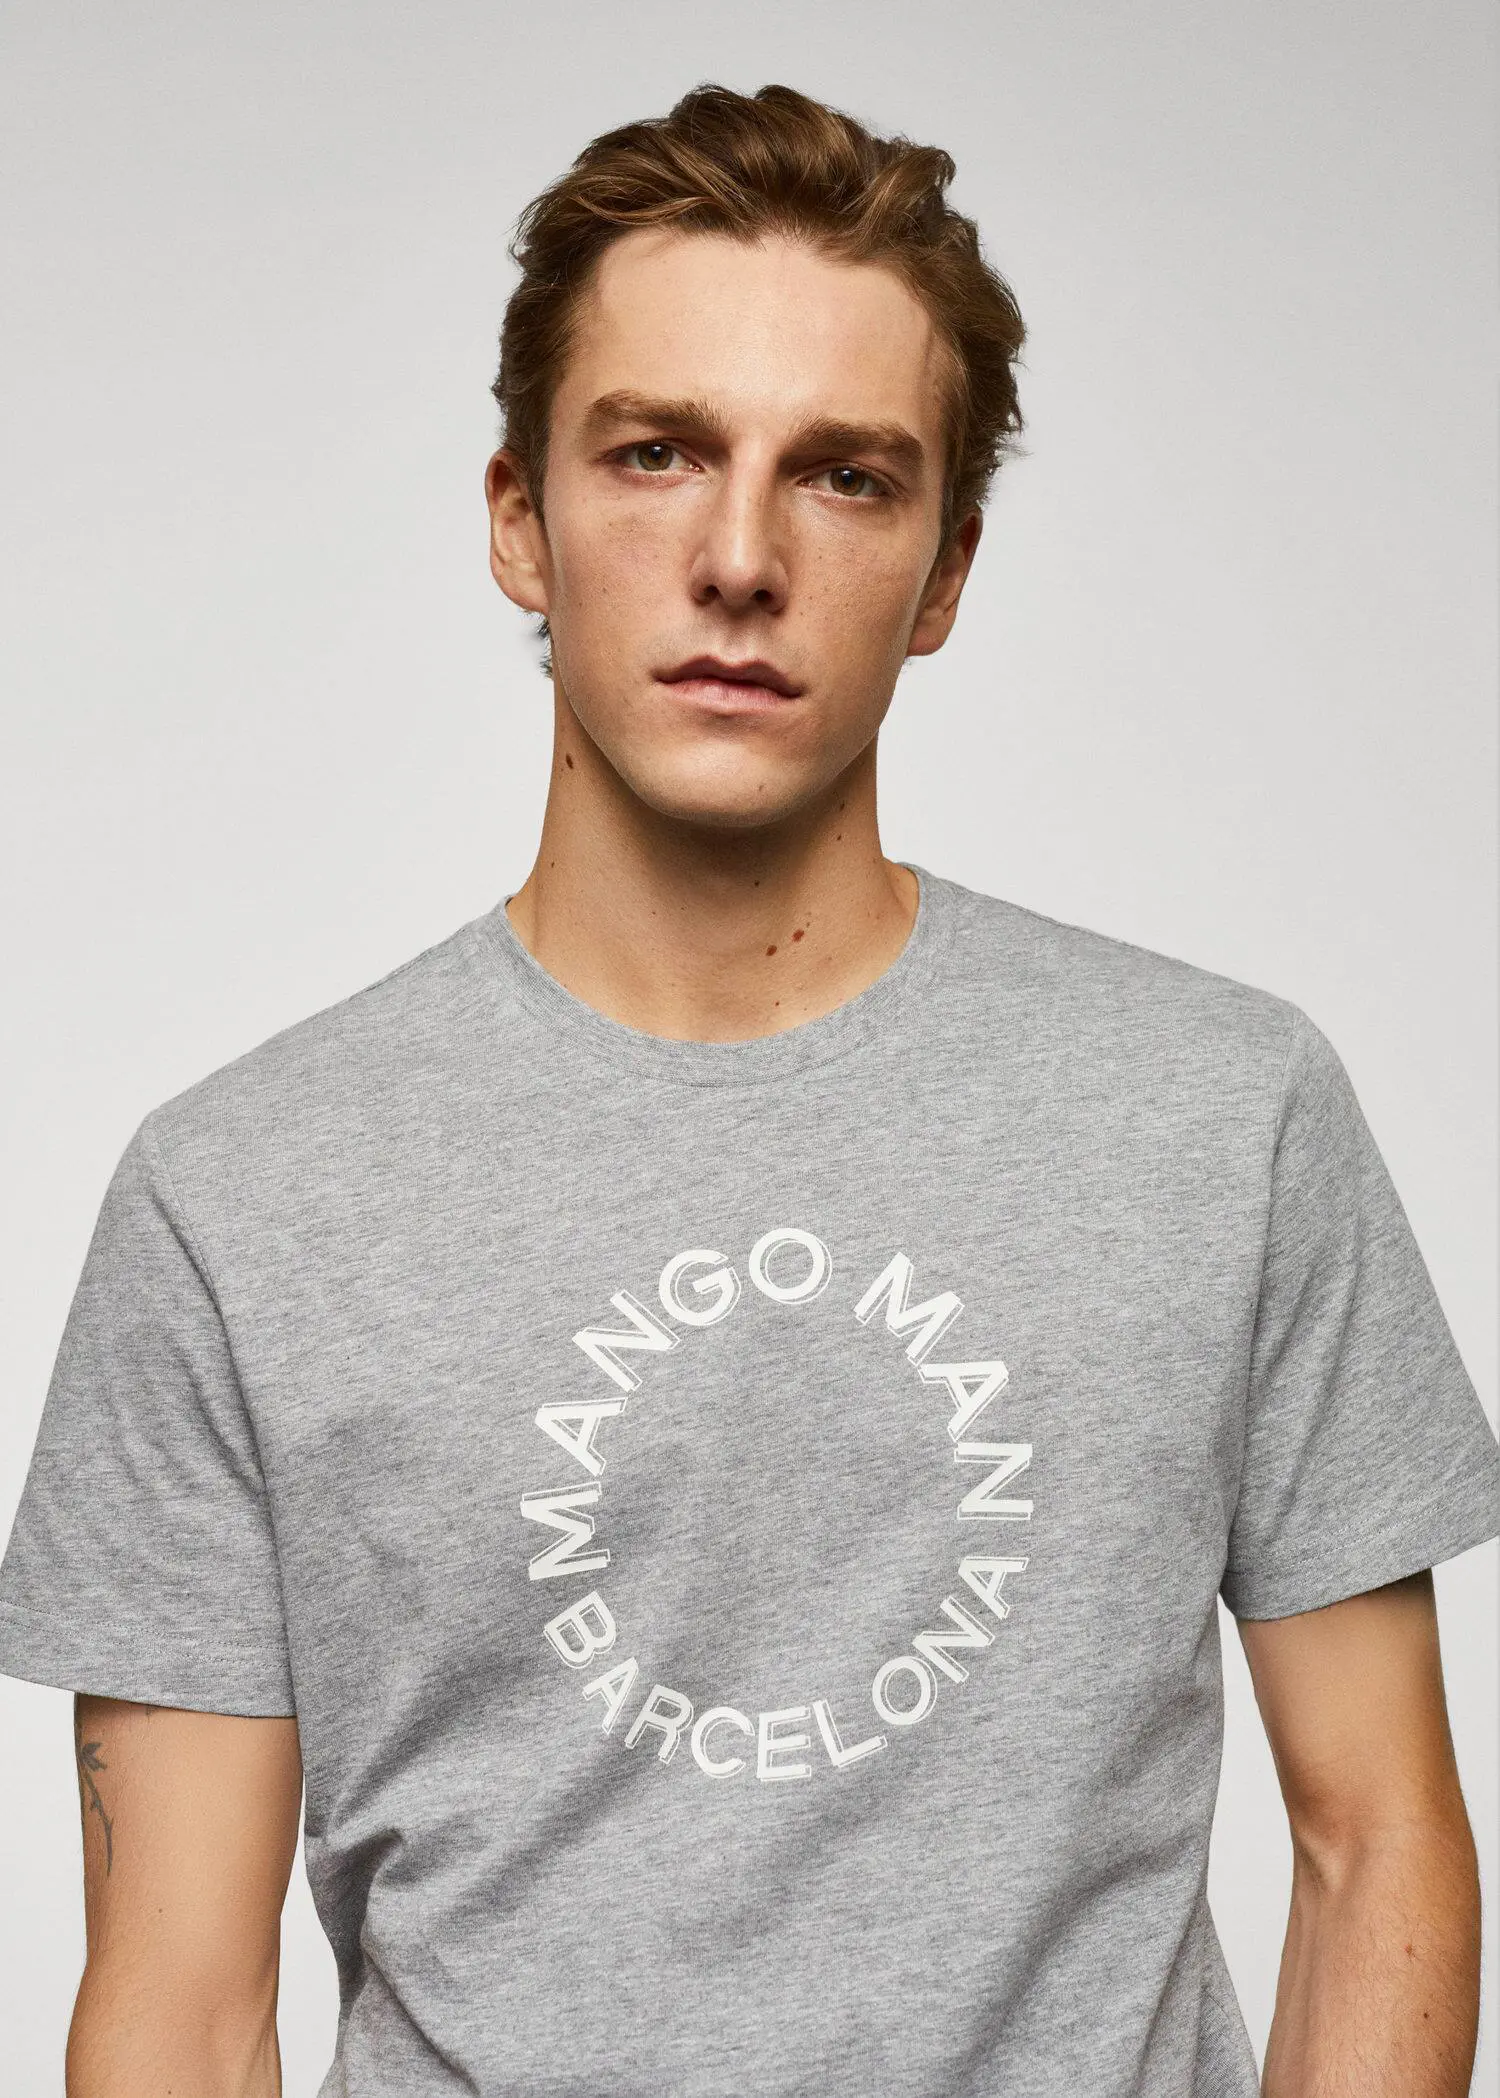 Mango 100% cotton t-shirt with logo. a man wearing a t-shirt that says " mango man barcelona ". 